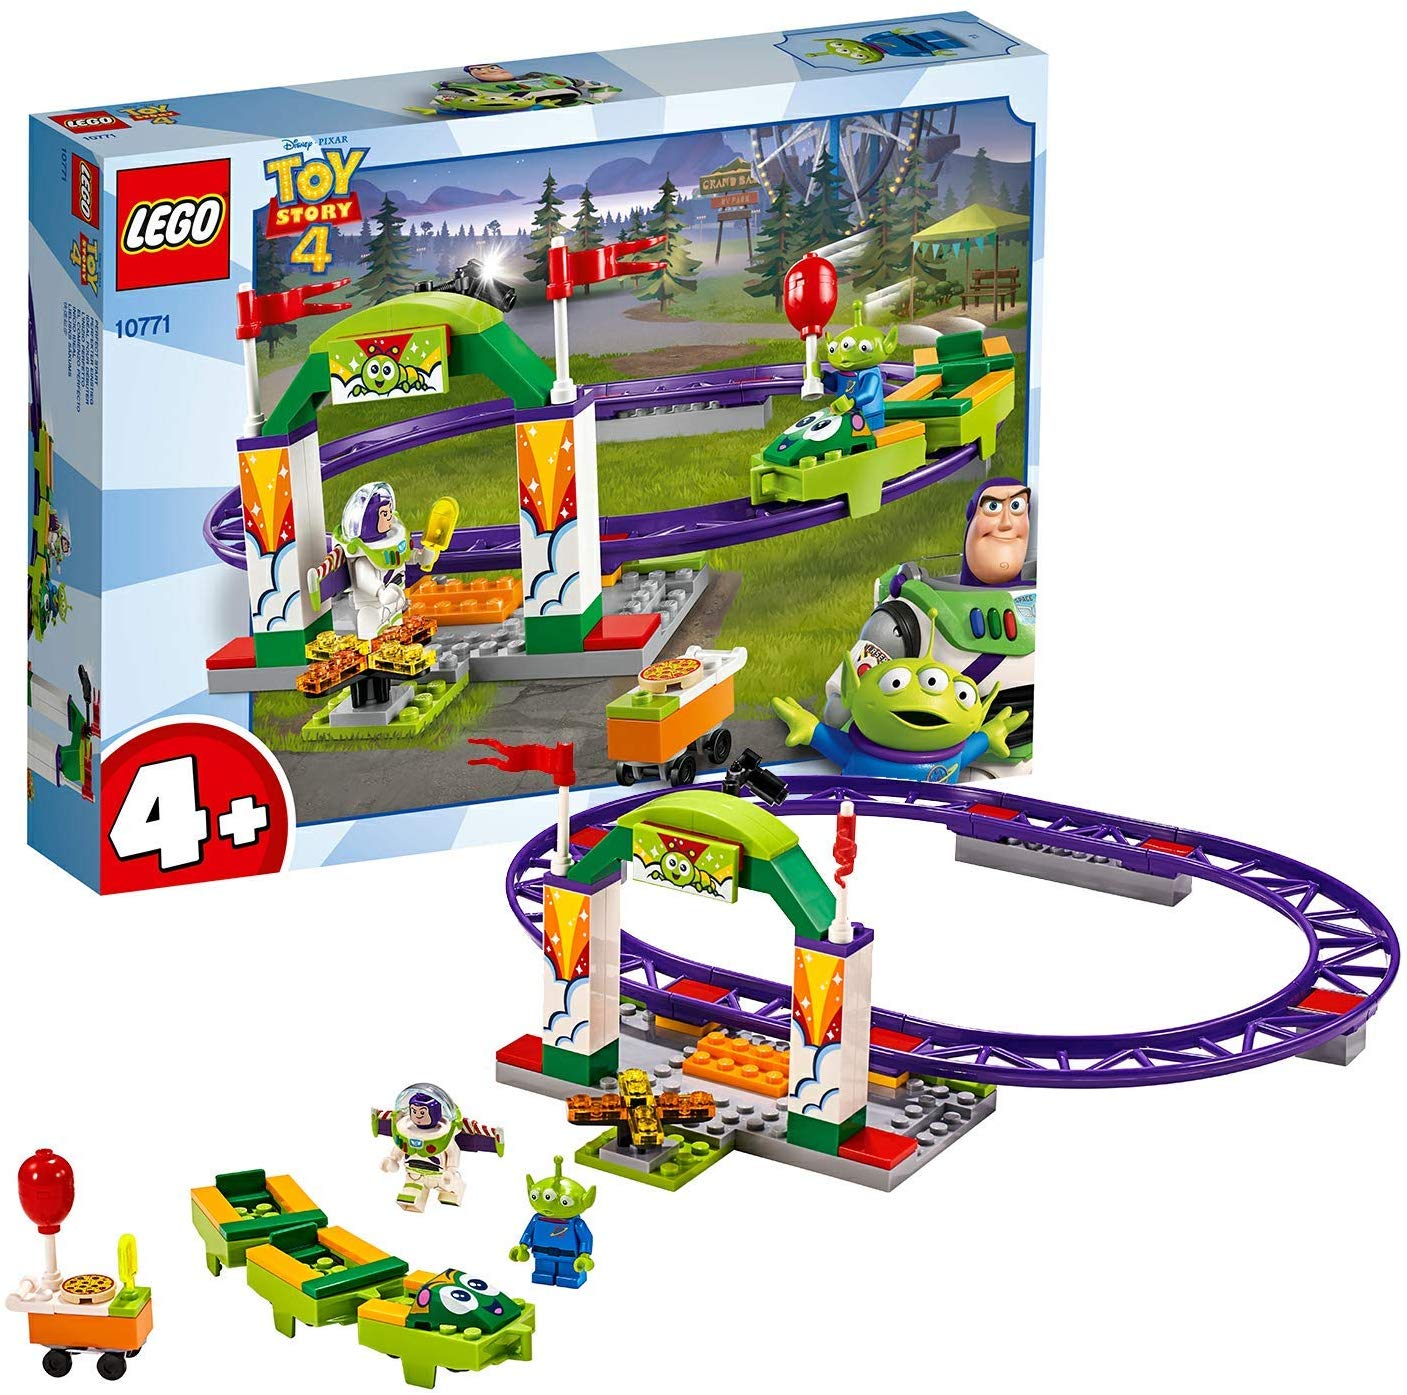 LEGO Disney Pixar’s Toy Story 4 Lego Juniors 10771 Missing Product Title, Multi-Colour